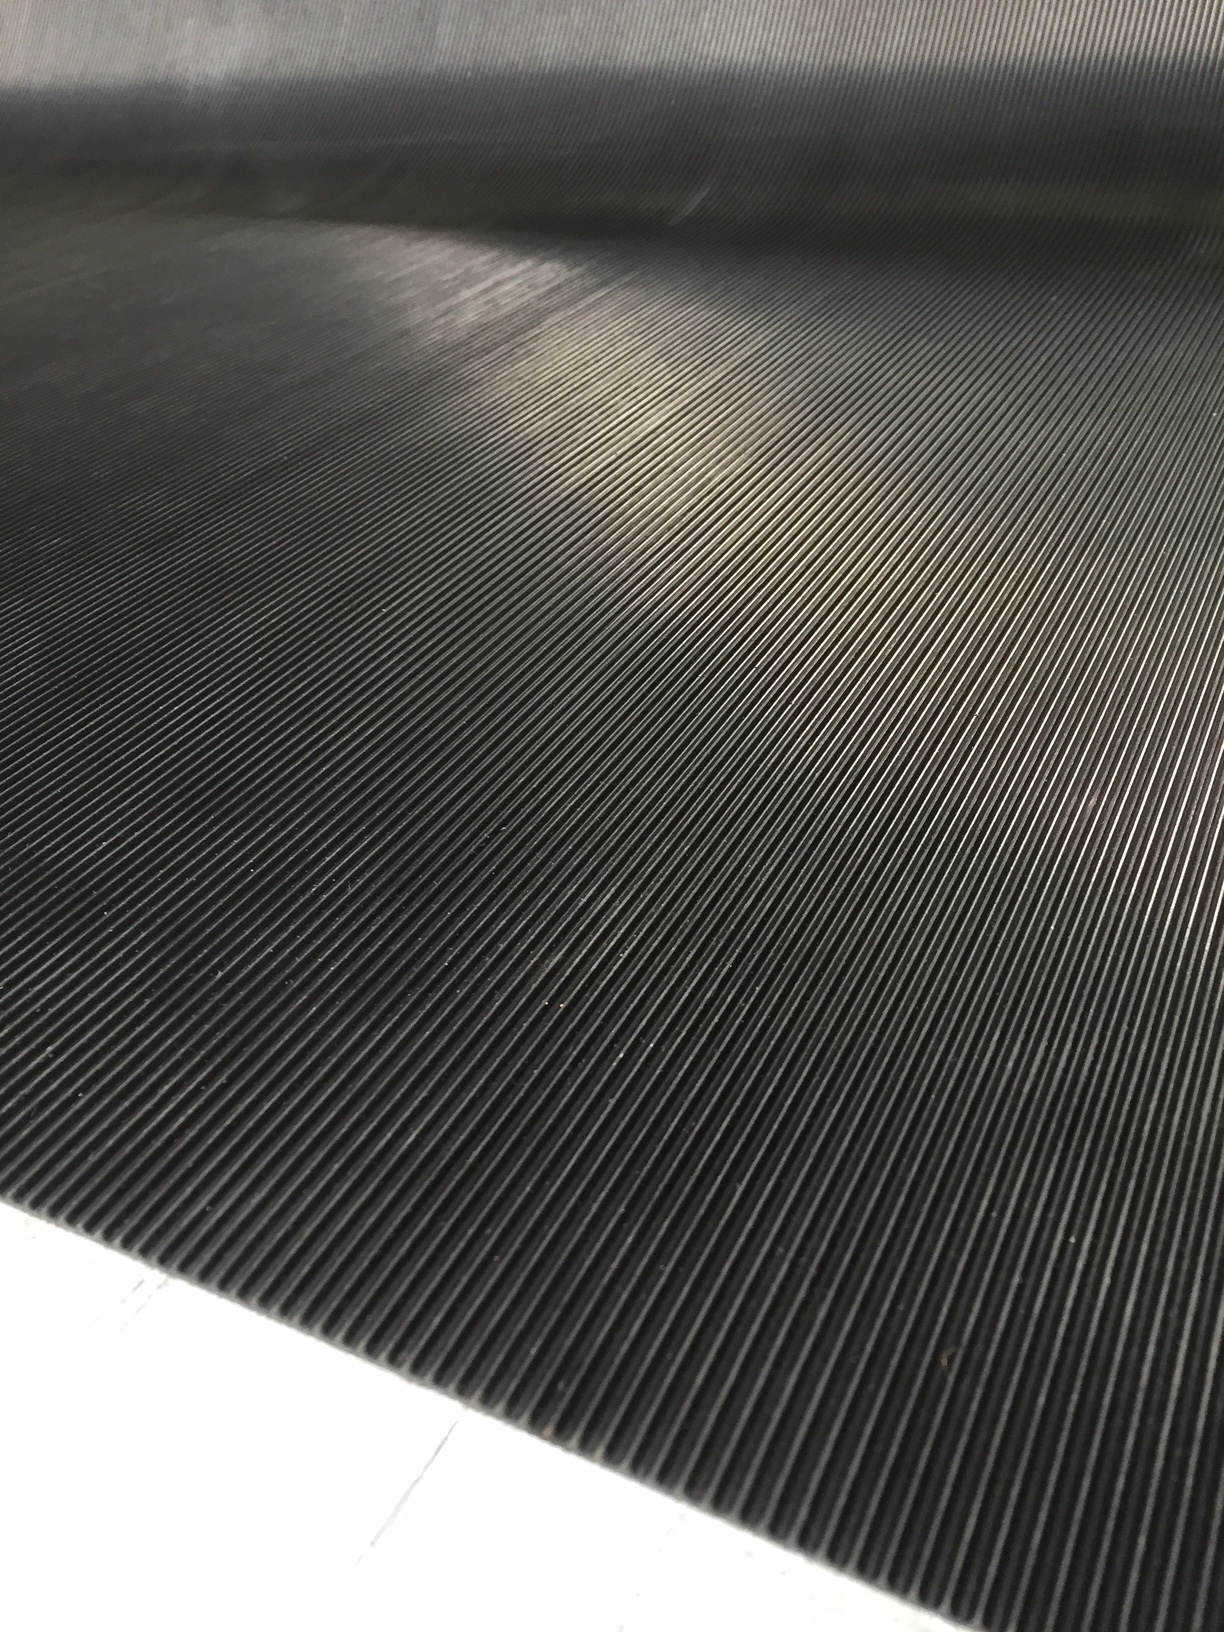 Tenex 5535210 36" x 75' Black Vinyl Ribbed Corrugated Floor Matting Runner 